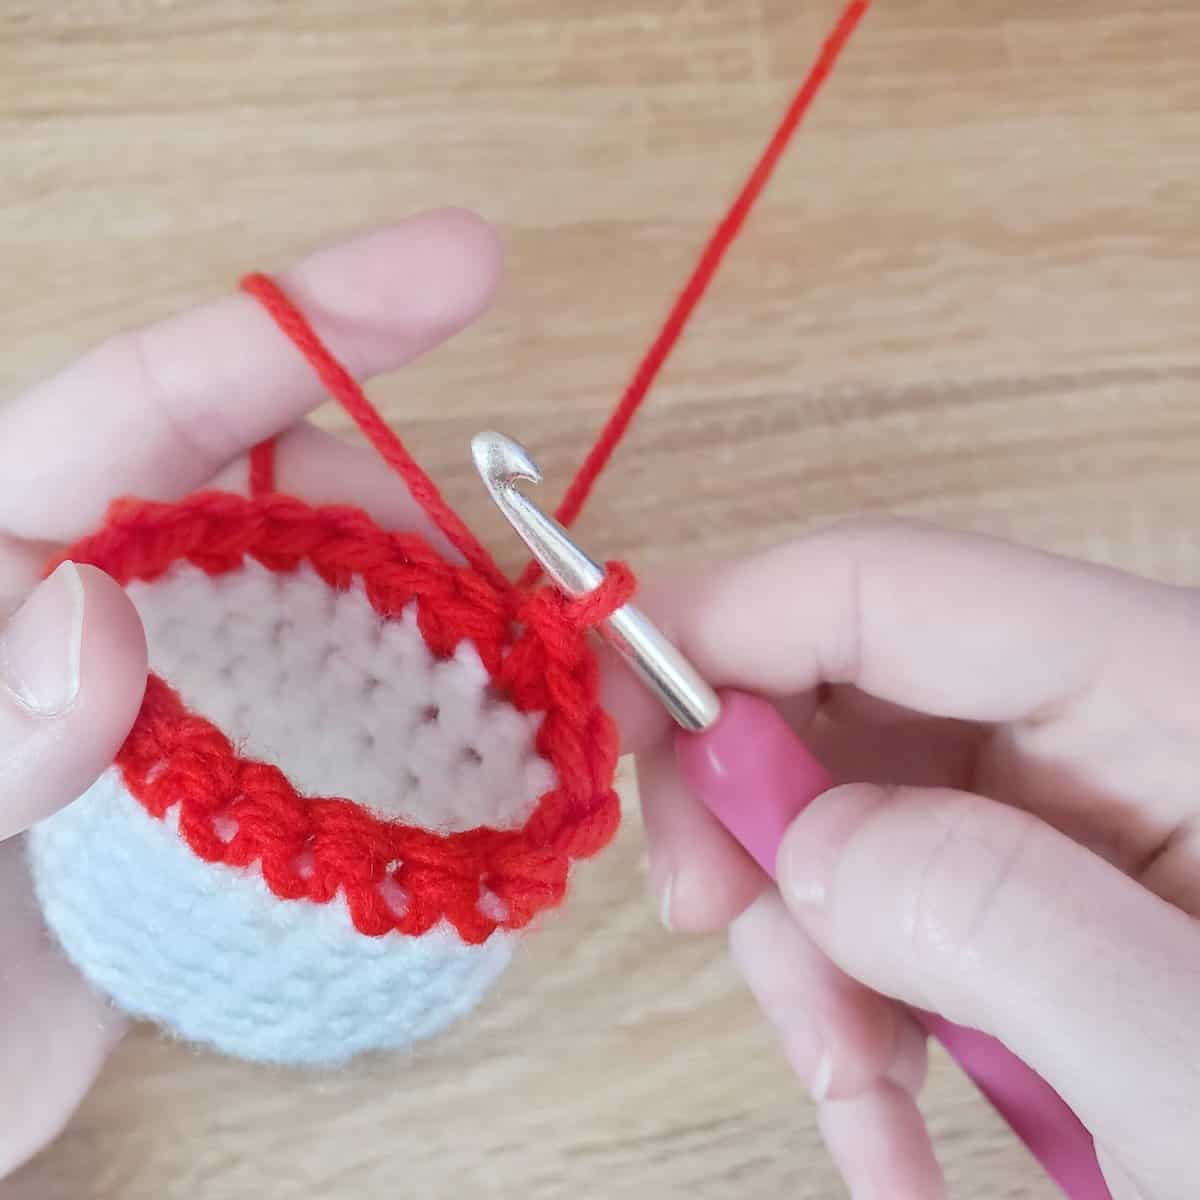 Brim Crochet slp st to first loop